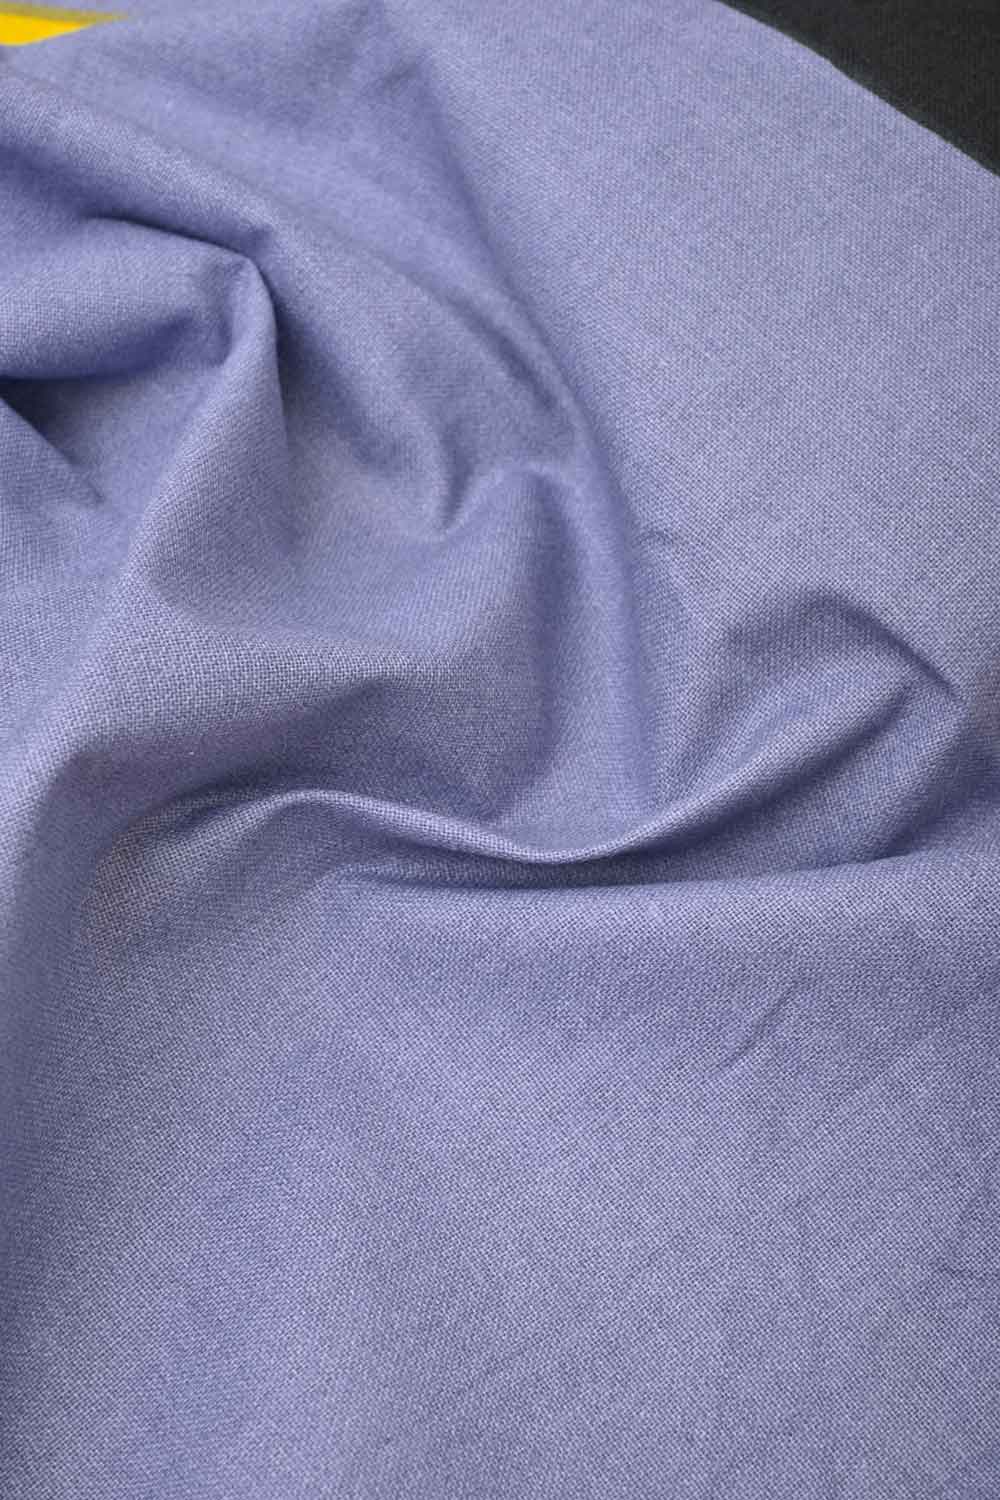 Polo Republica Vienna Premium Collection 3 Piece Double Bed Sheet Bed Sheet Fiza 